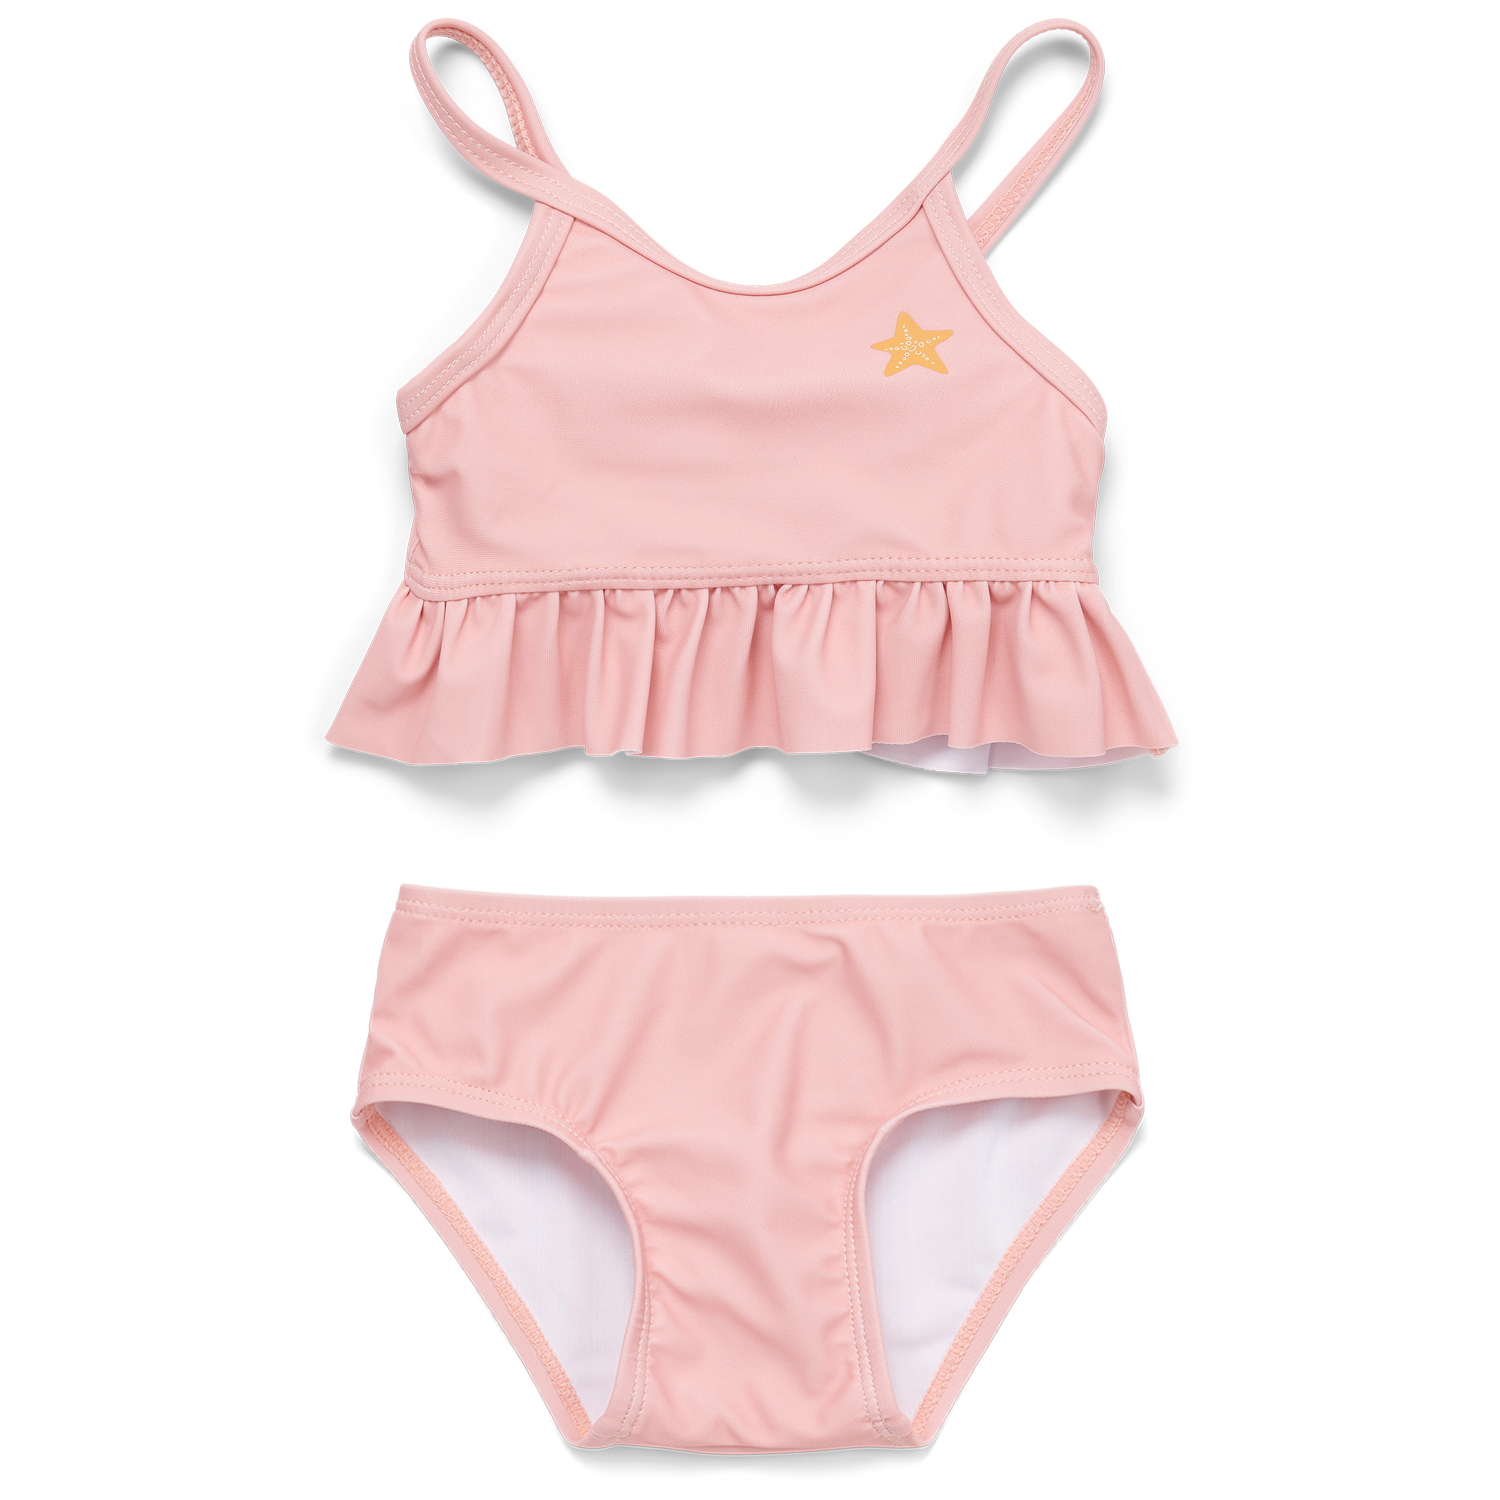 Bikini mit Volants / Rüschen Starfish Pink rosa (Gr. 74/80)